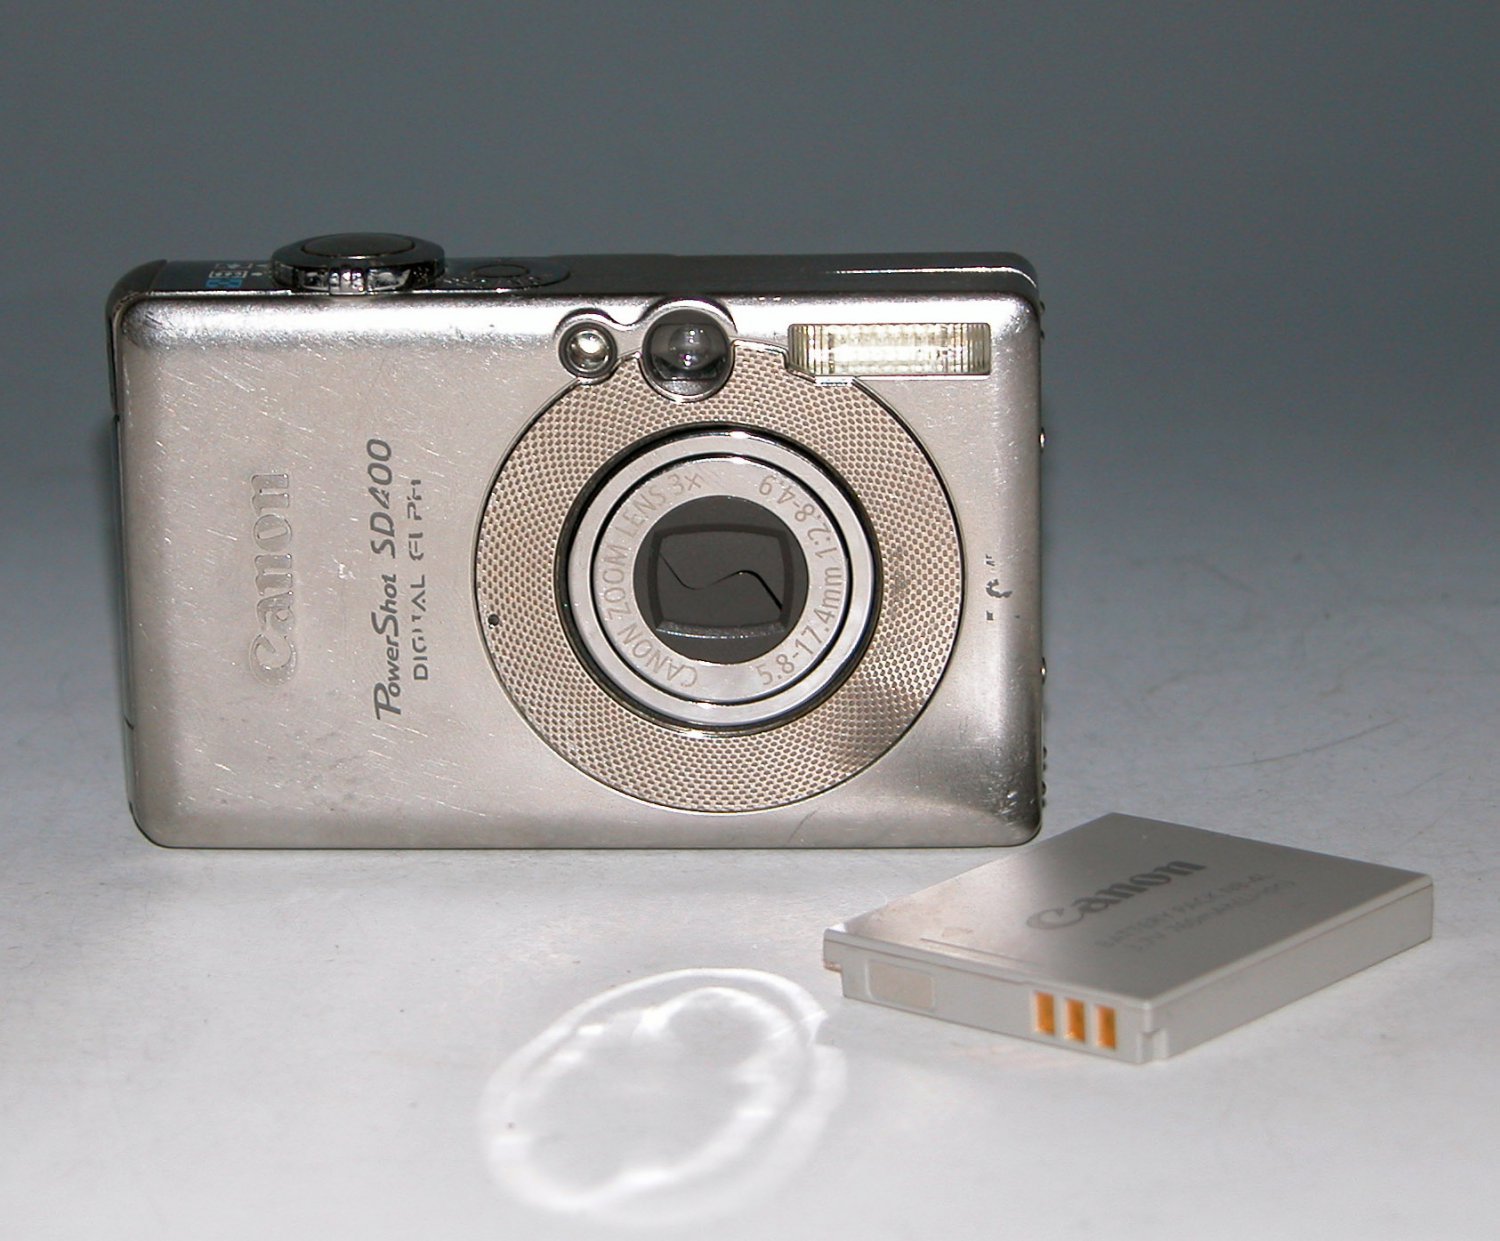 Canon PowerShot Digital ELPH SD400 5.0MP Digital Camera #6721